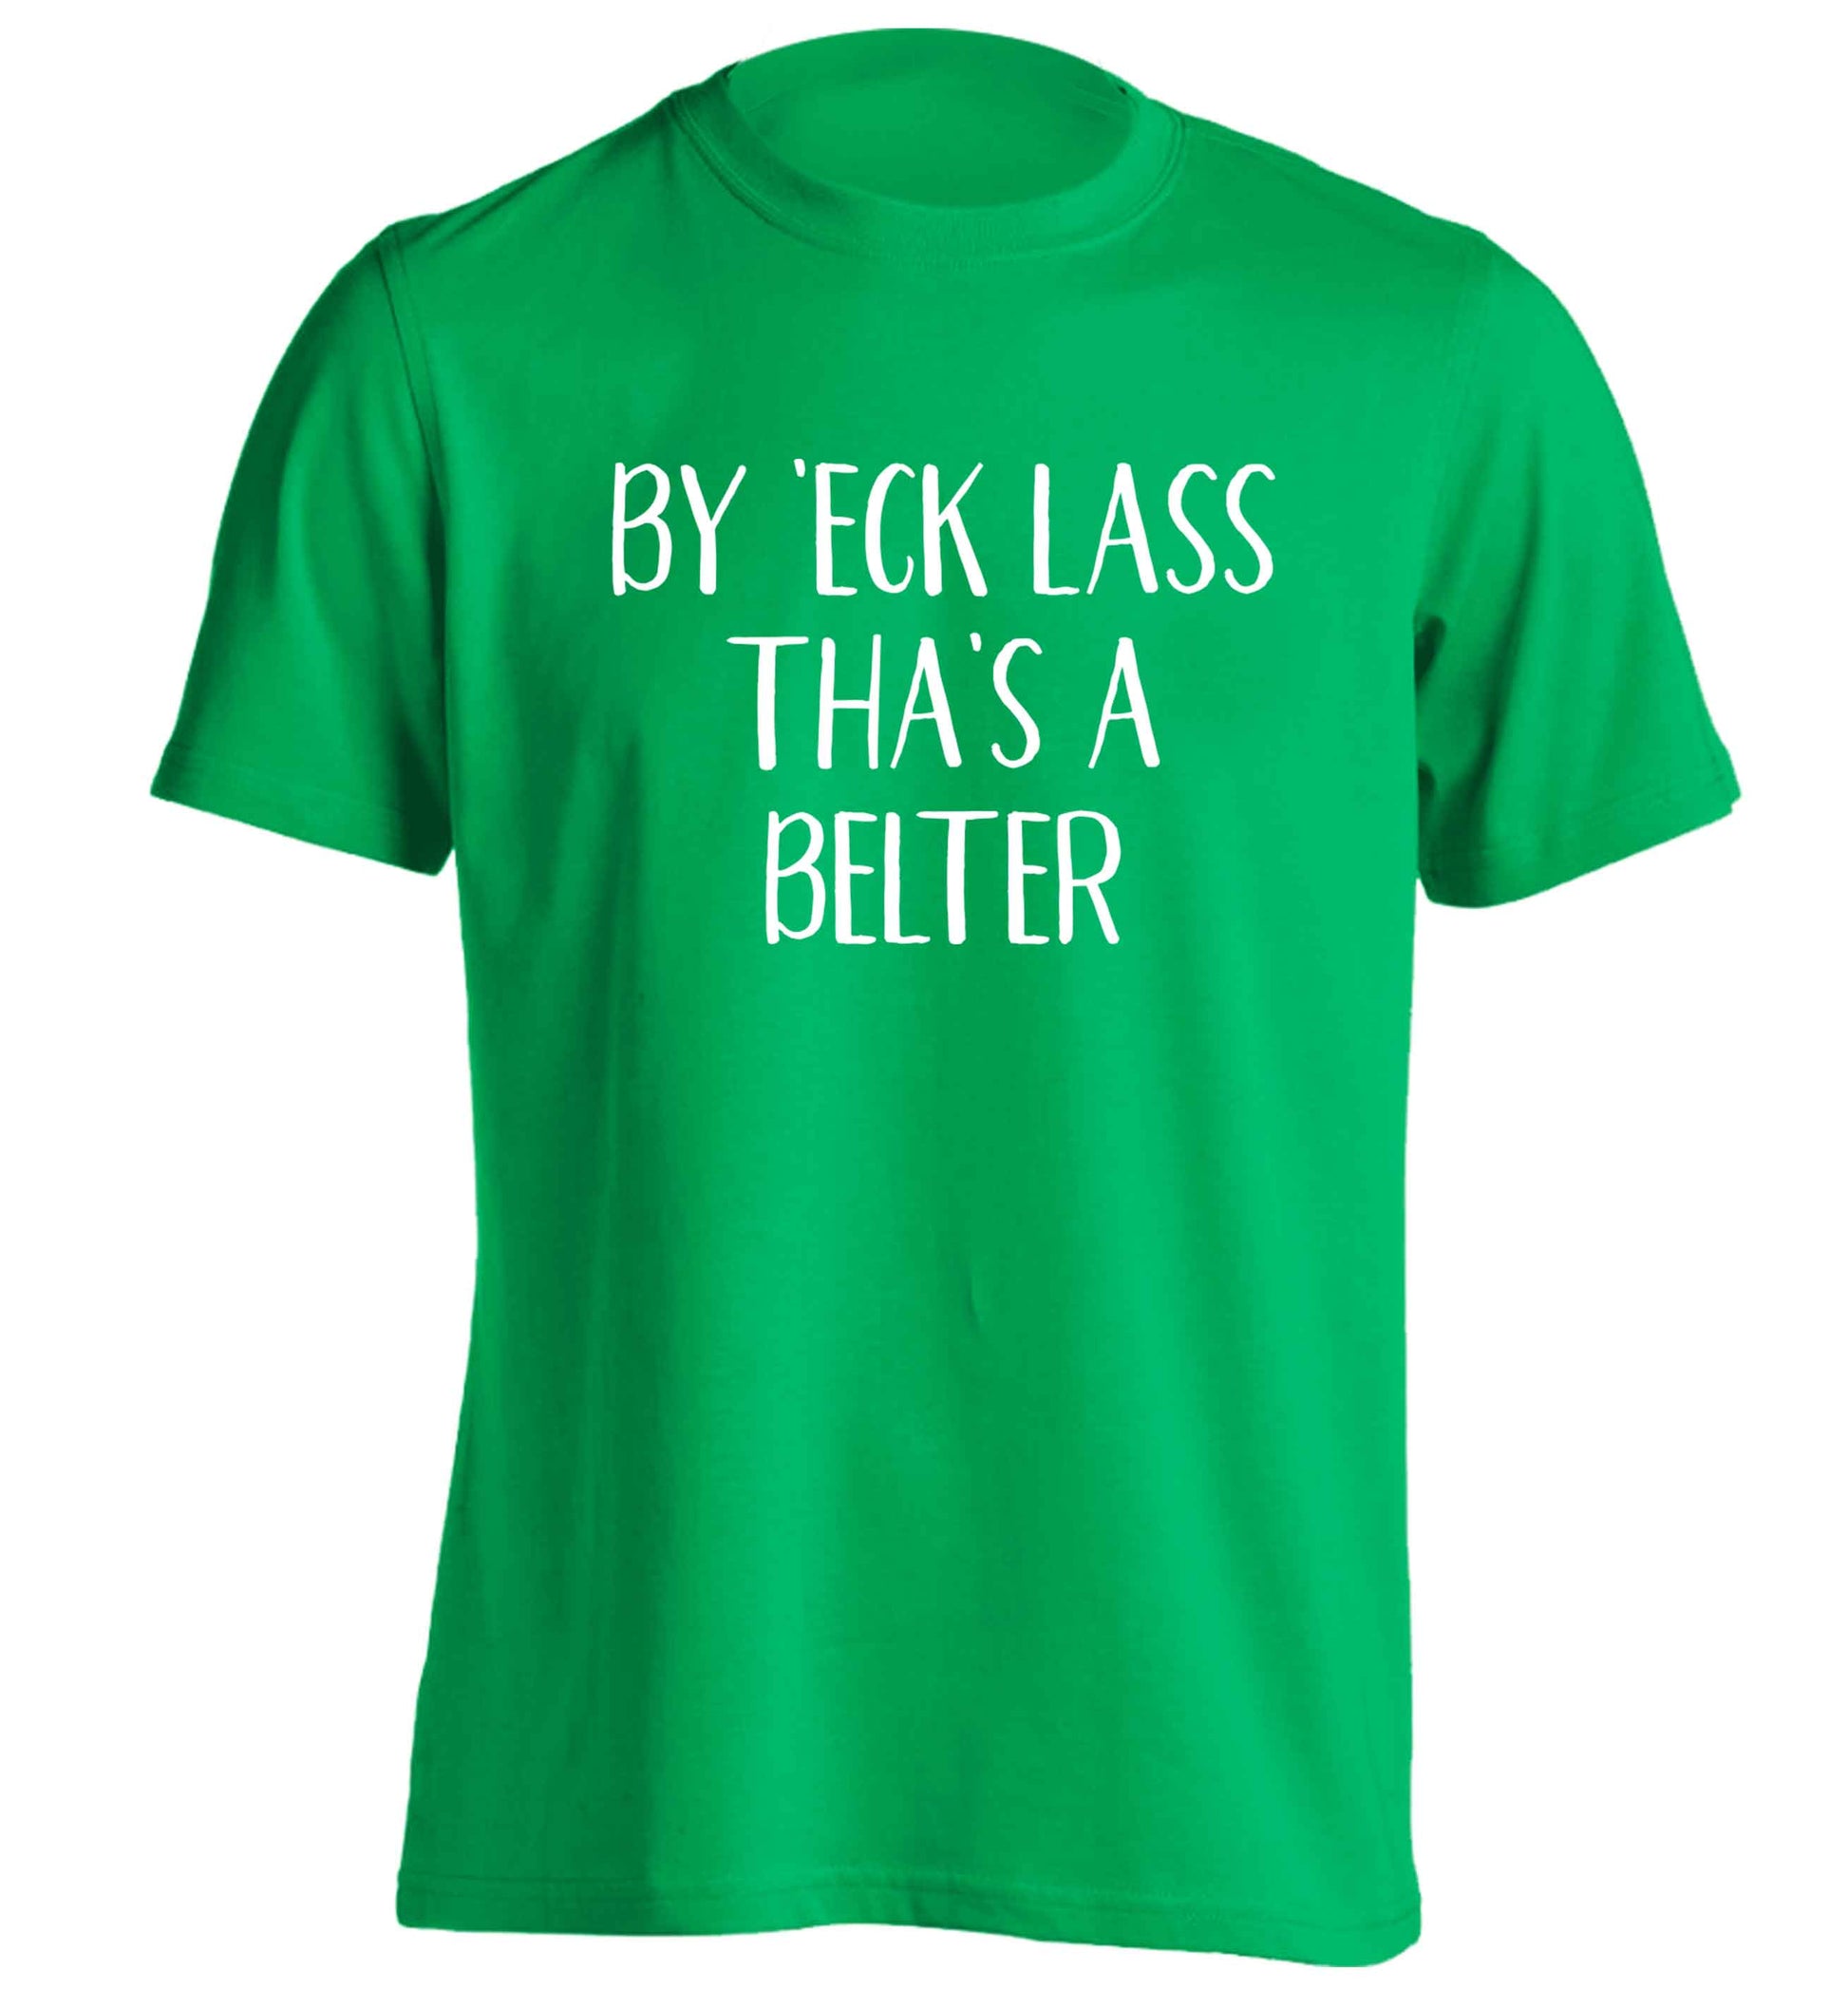 Be 'eck lass tha's a belter adults unisex green Tshirt 2XL